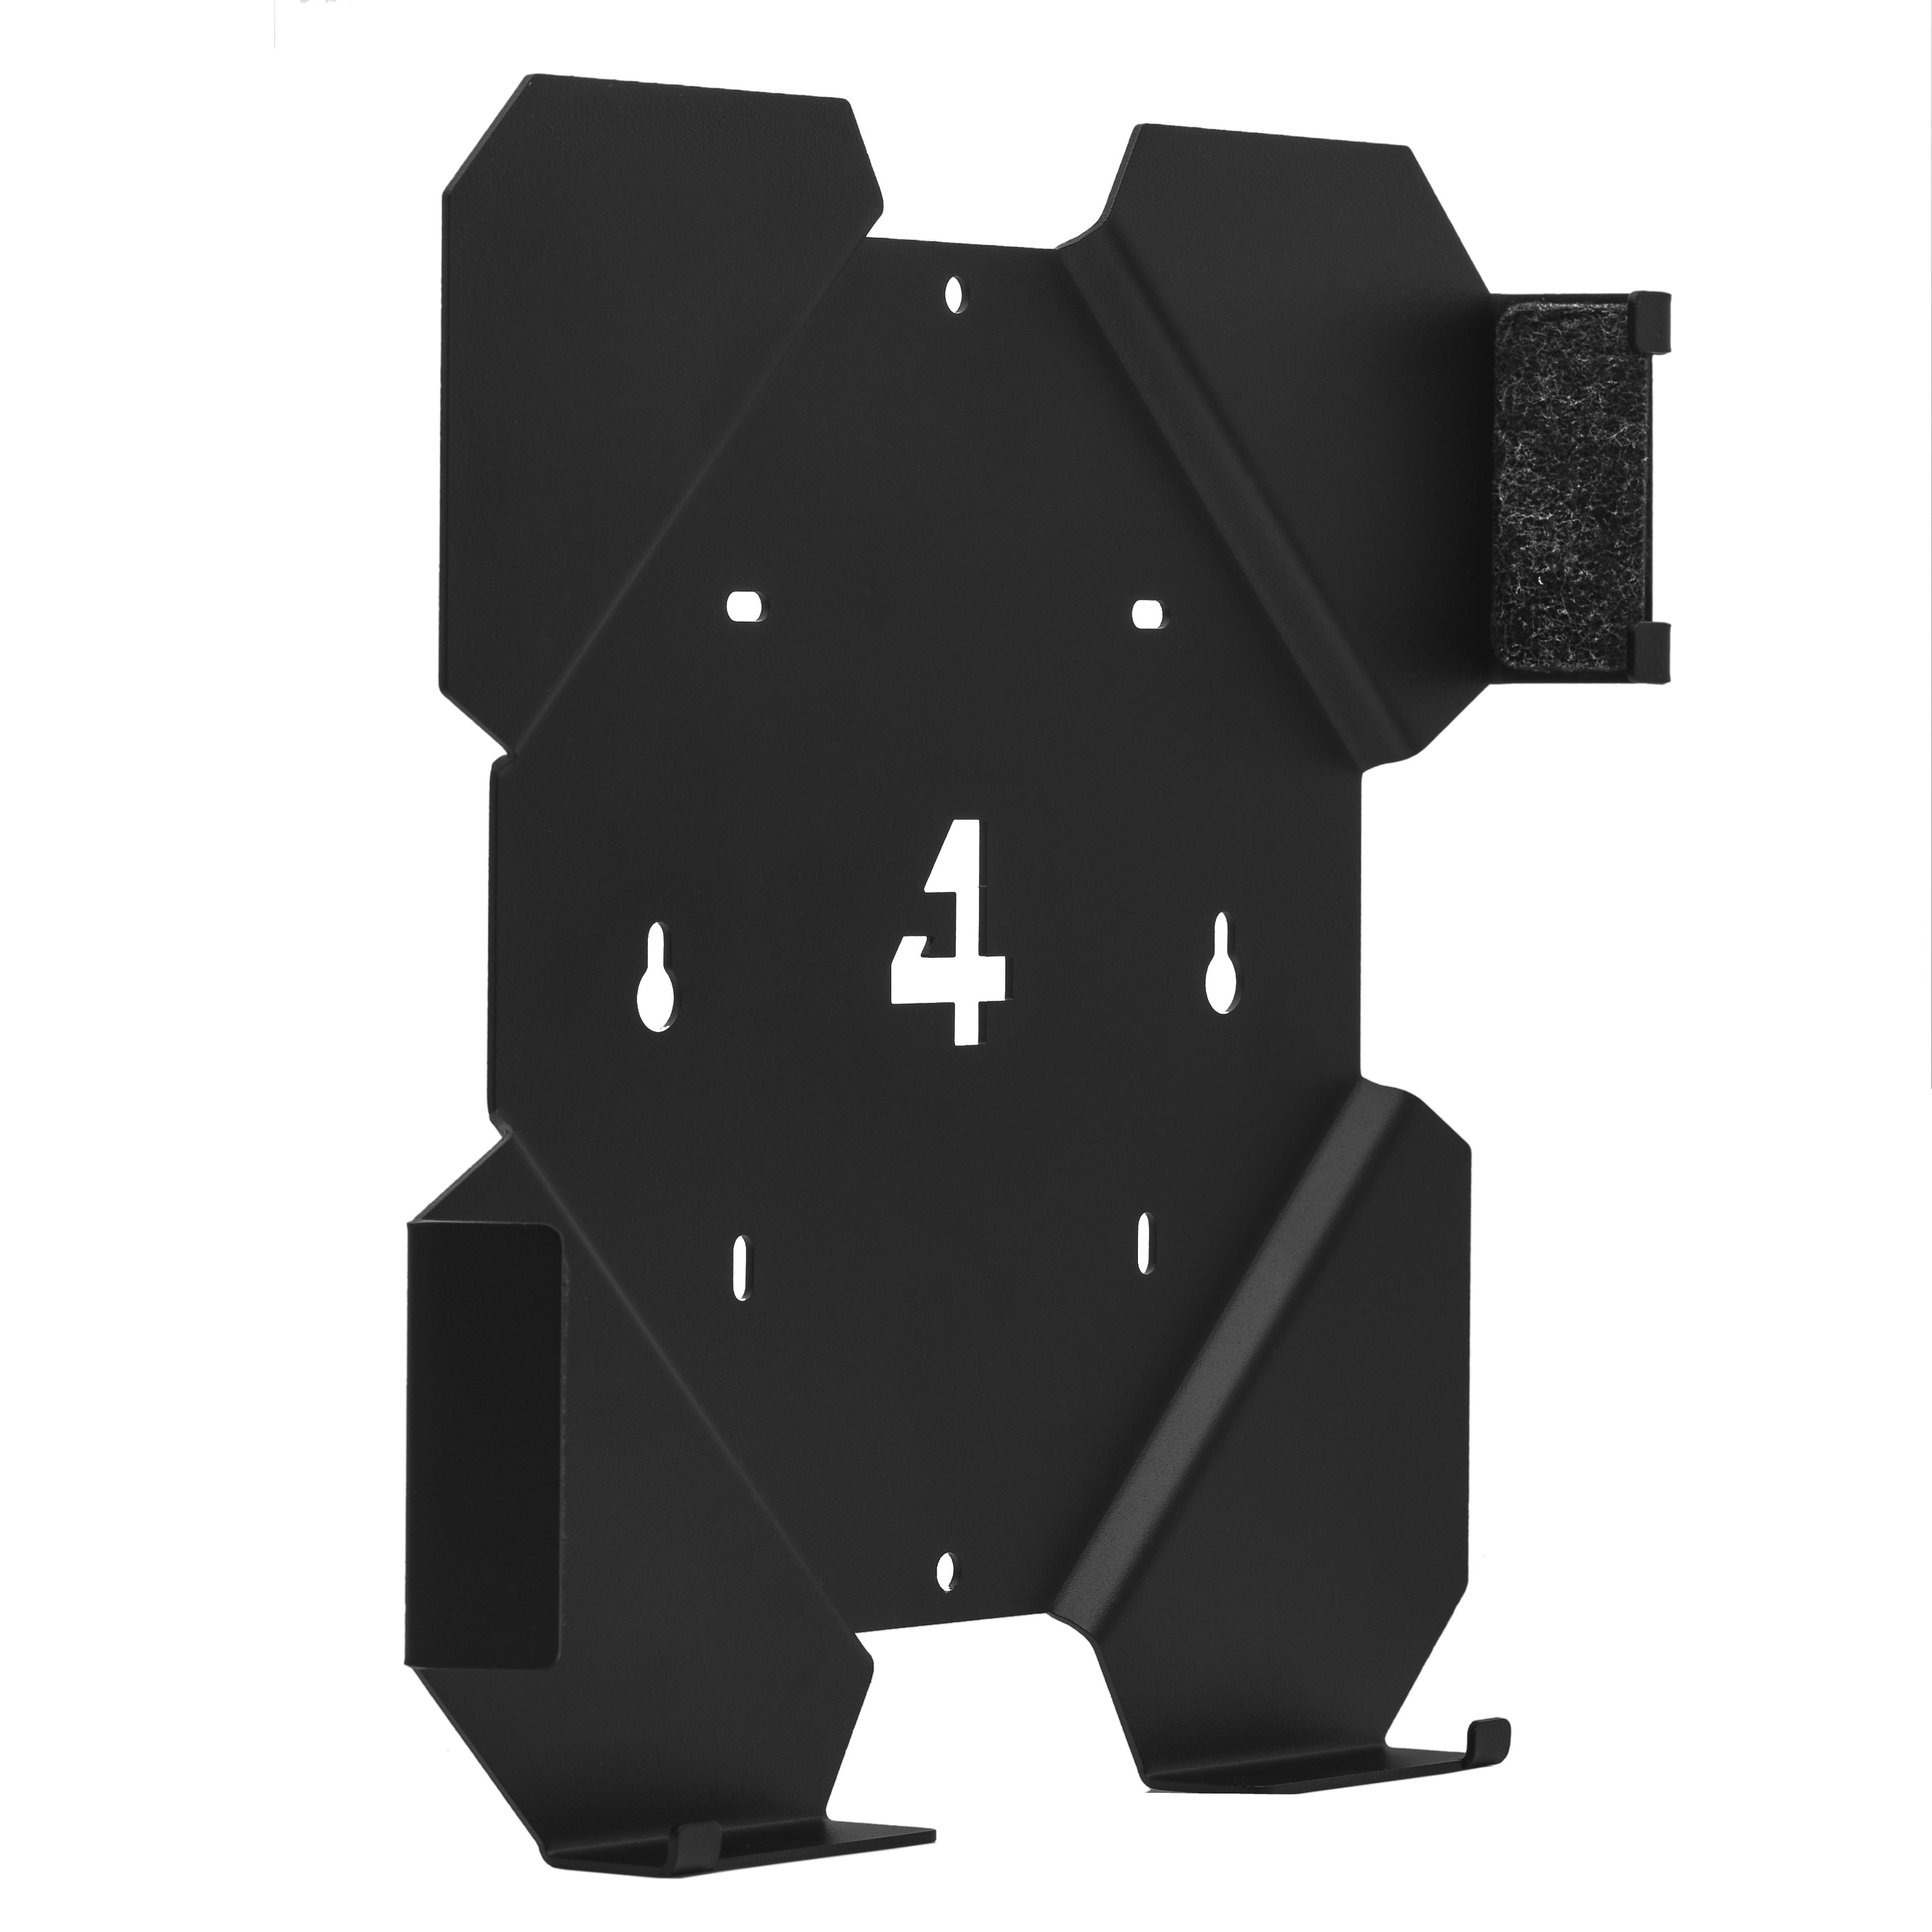 4MOUNT WALL MOUNT FOR PS4 PLAYSTATION 4 SLIM BLACK SET - 4